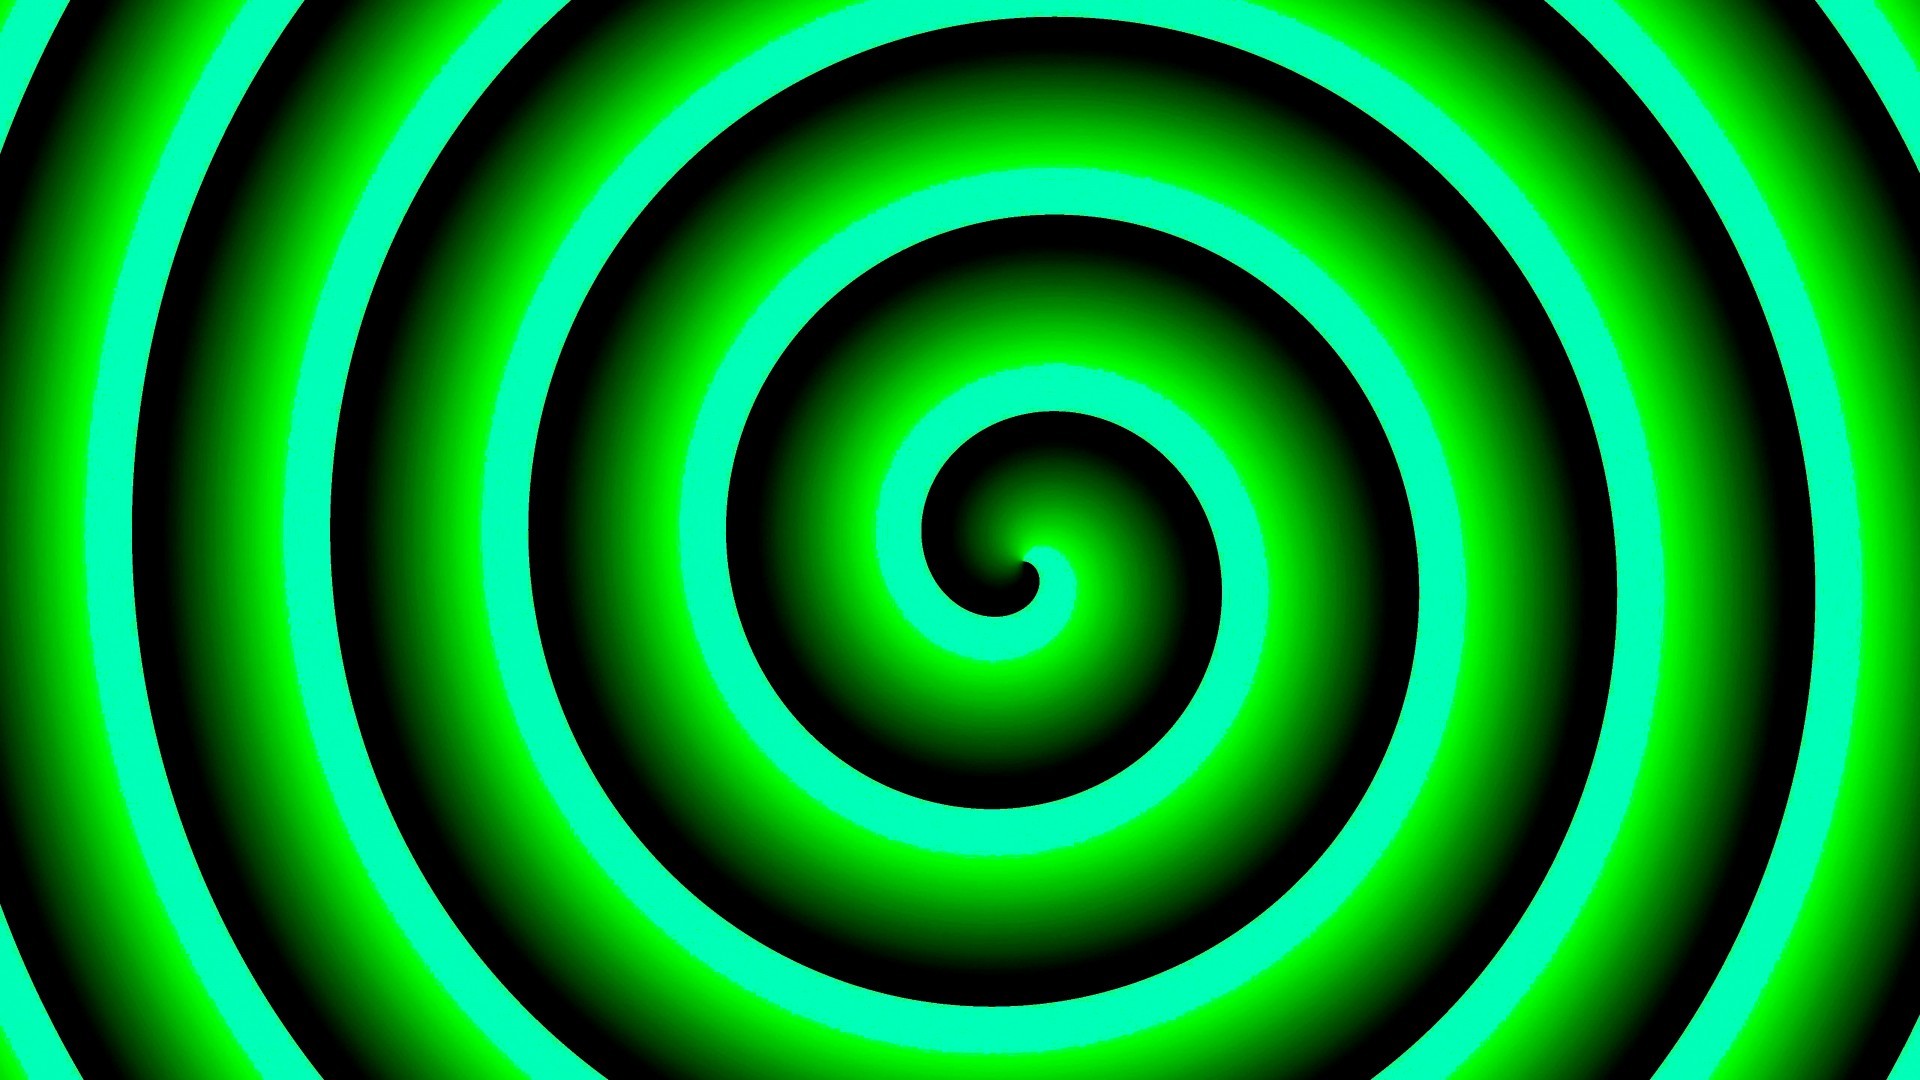 carta da parati ipnotica,verde,spirale,vortice,arte frattale,cerchio